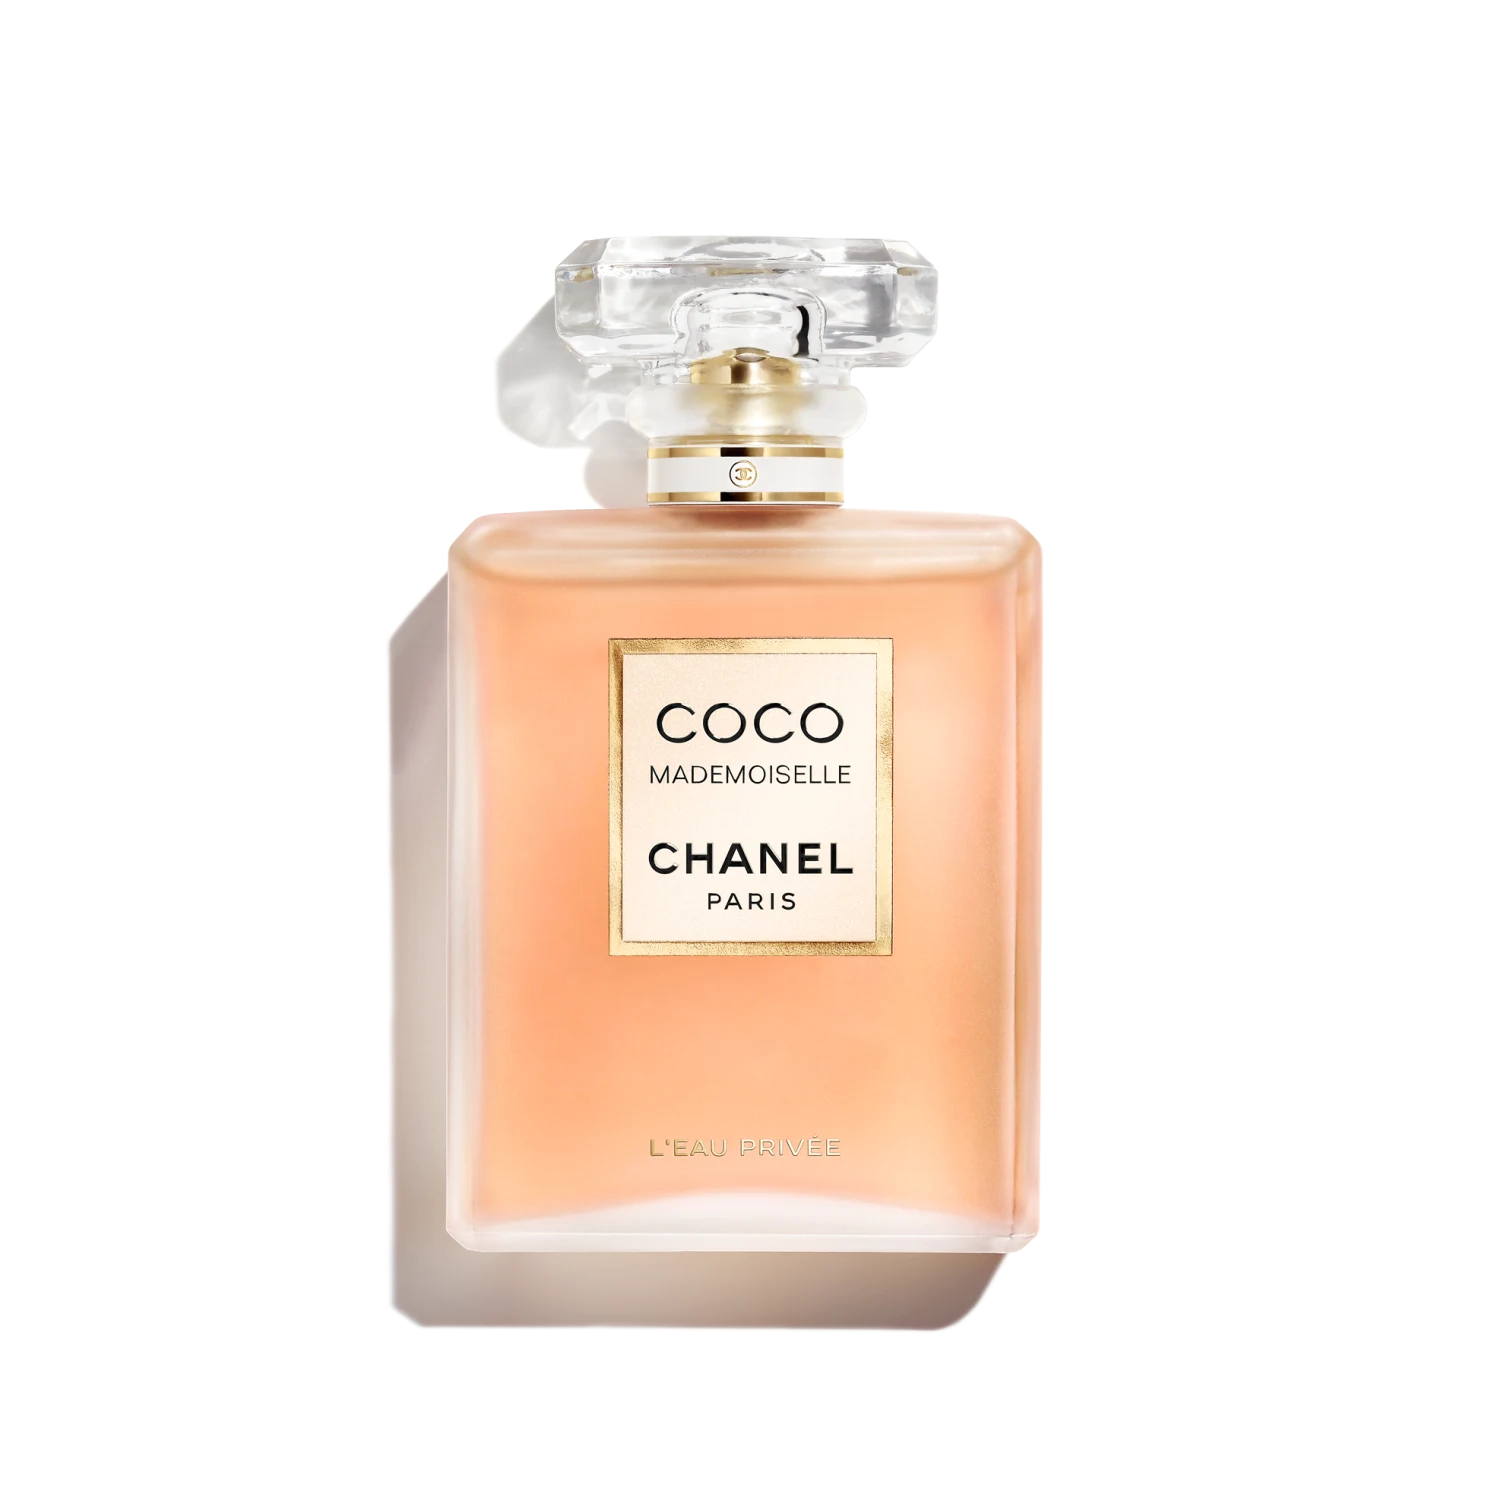 Вода парфюмерная Chanel Coco Mademoiselle L'Eau Privee женская, 100 мл chanel 5